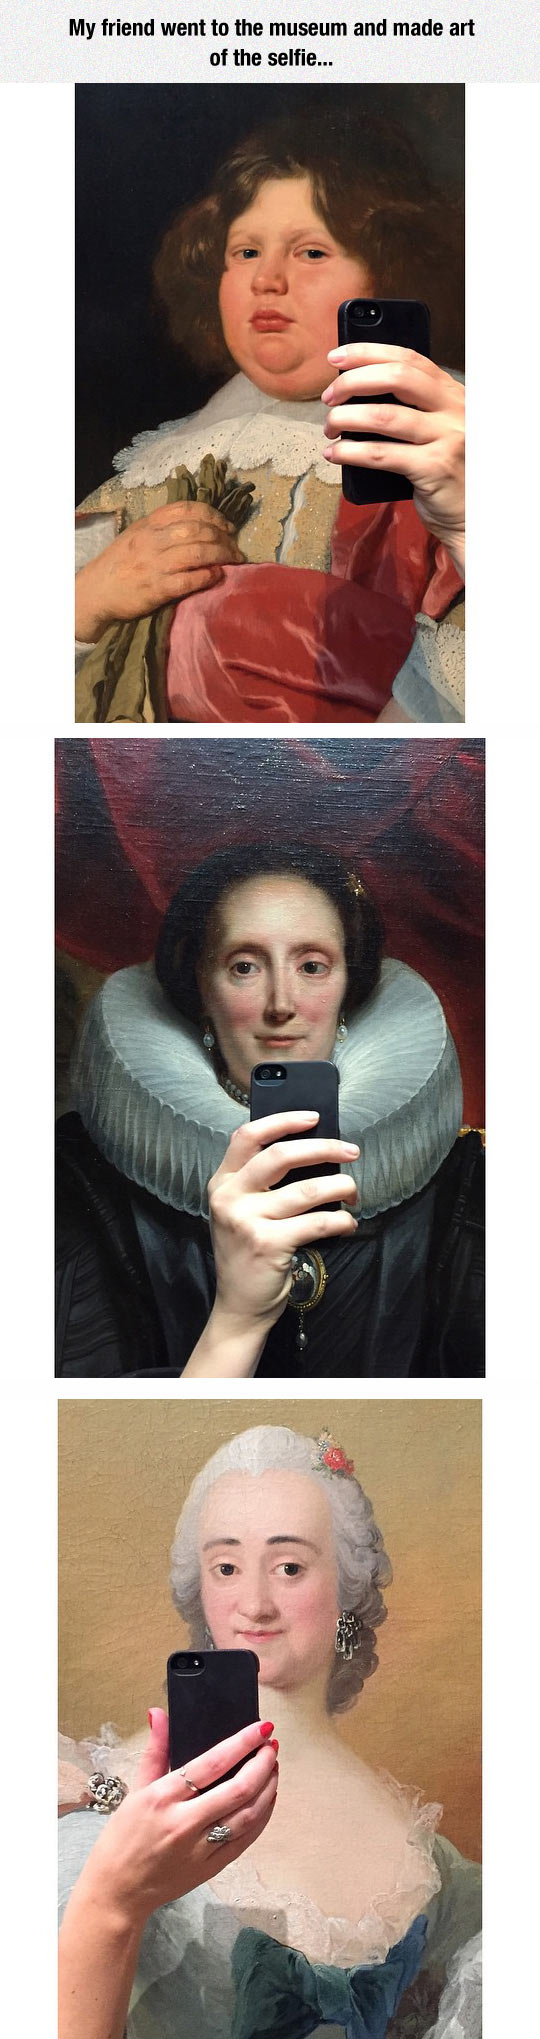 The+Art+Of+The+Selfie